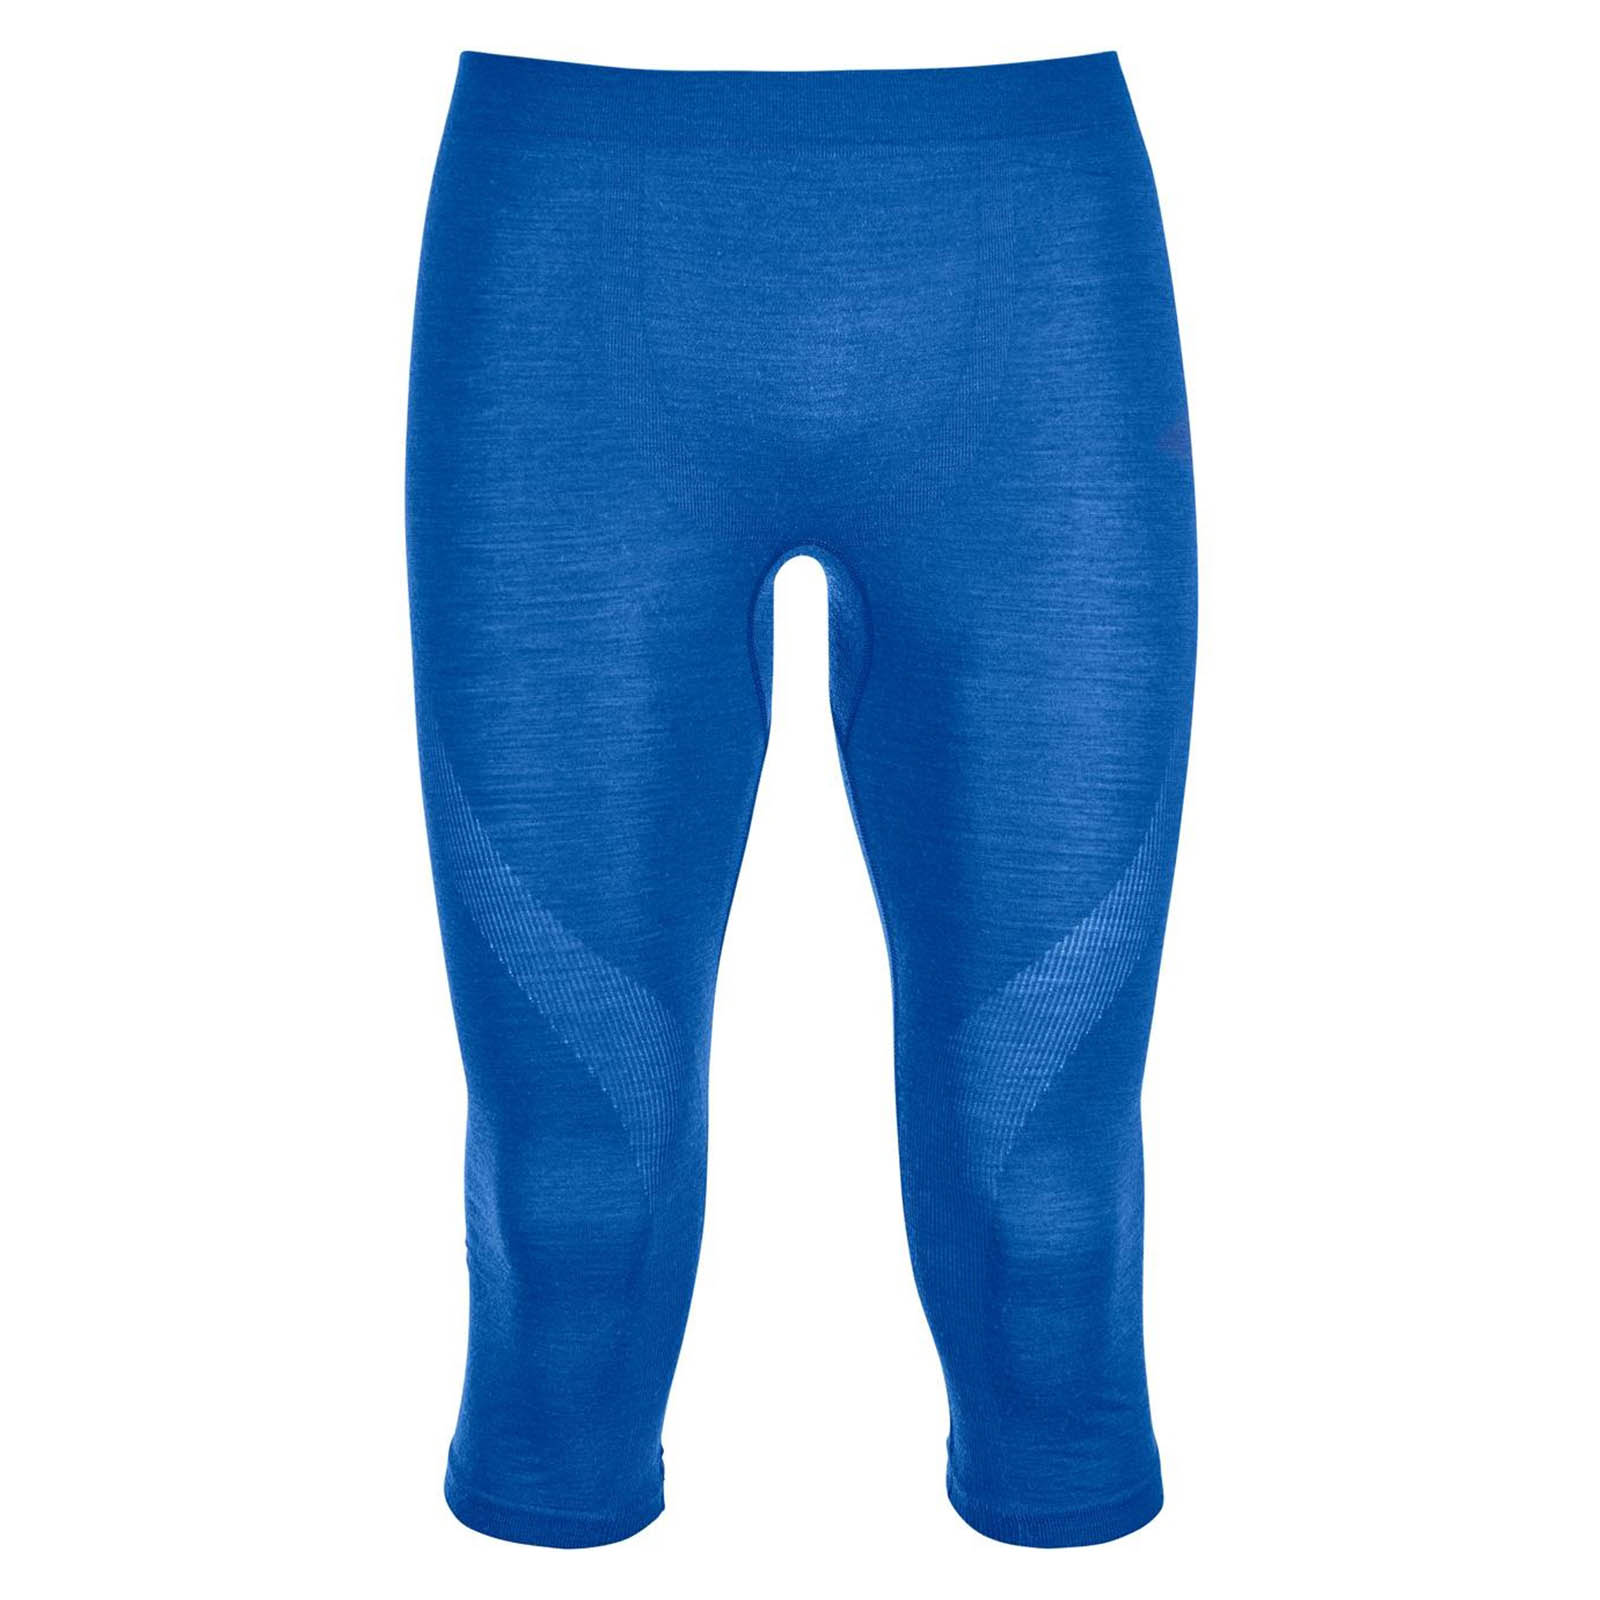 ORTOVOX 120 Comp Light Short Pants Herren 3/4 Unterhose just blue